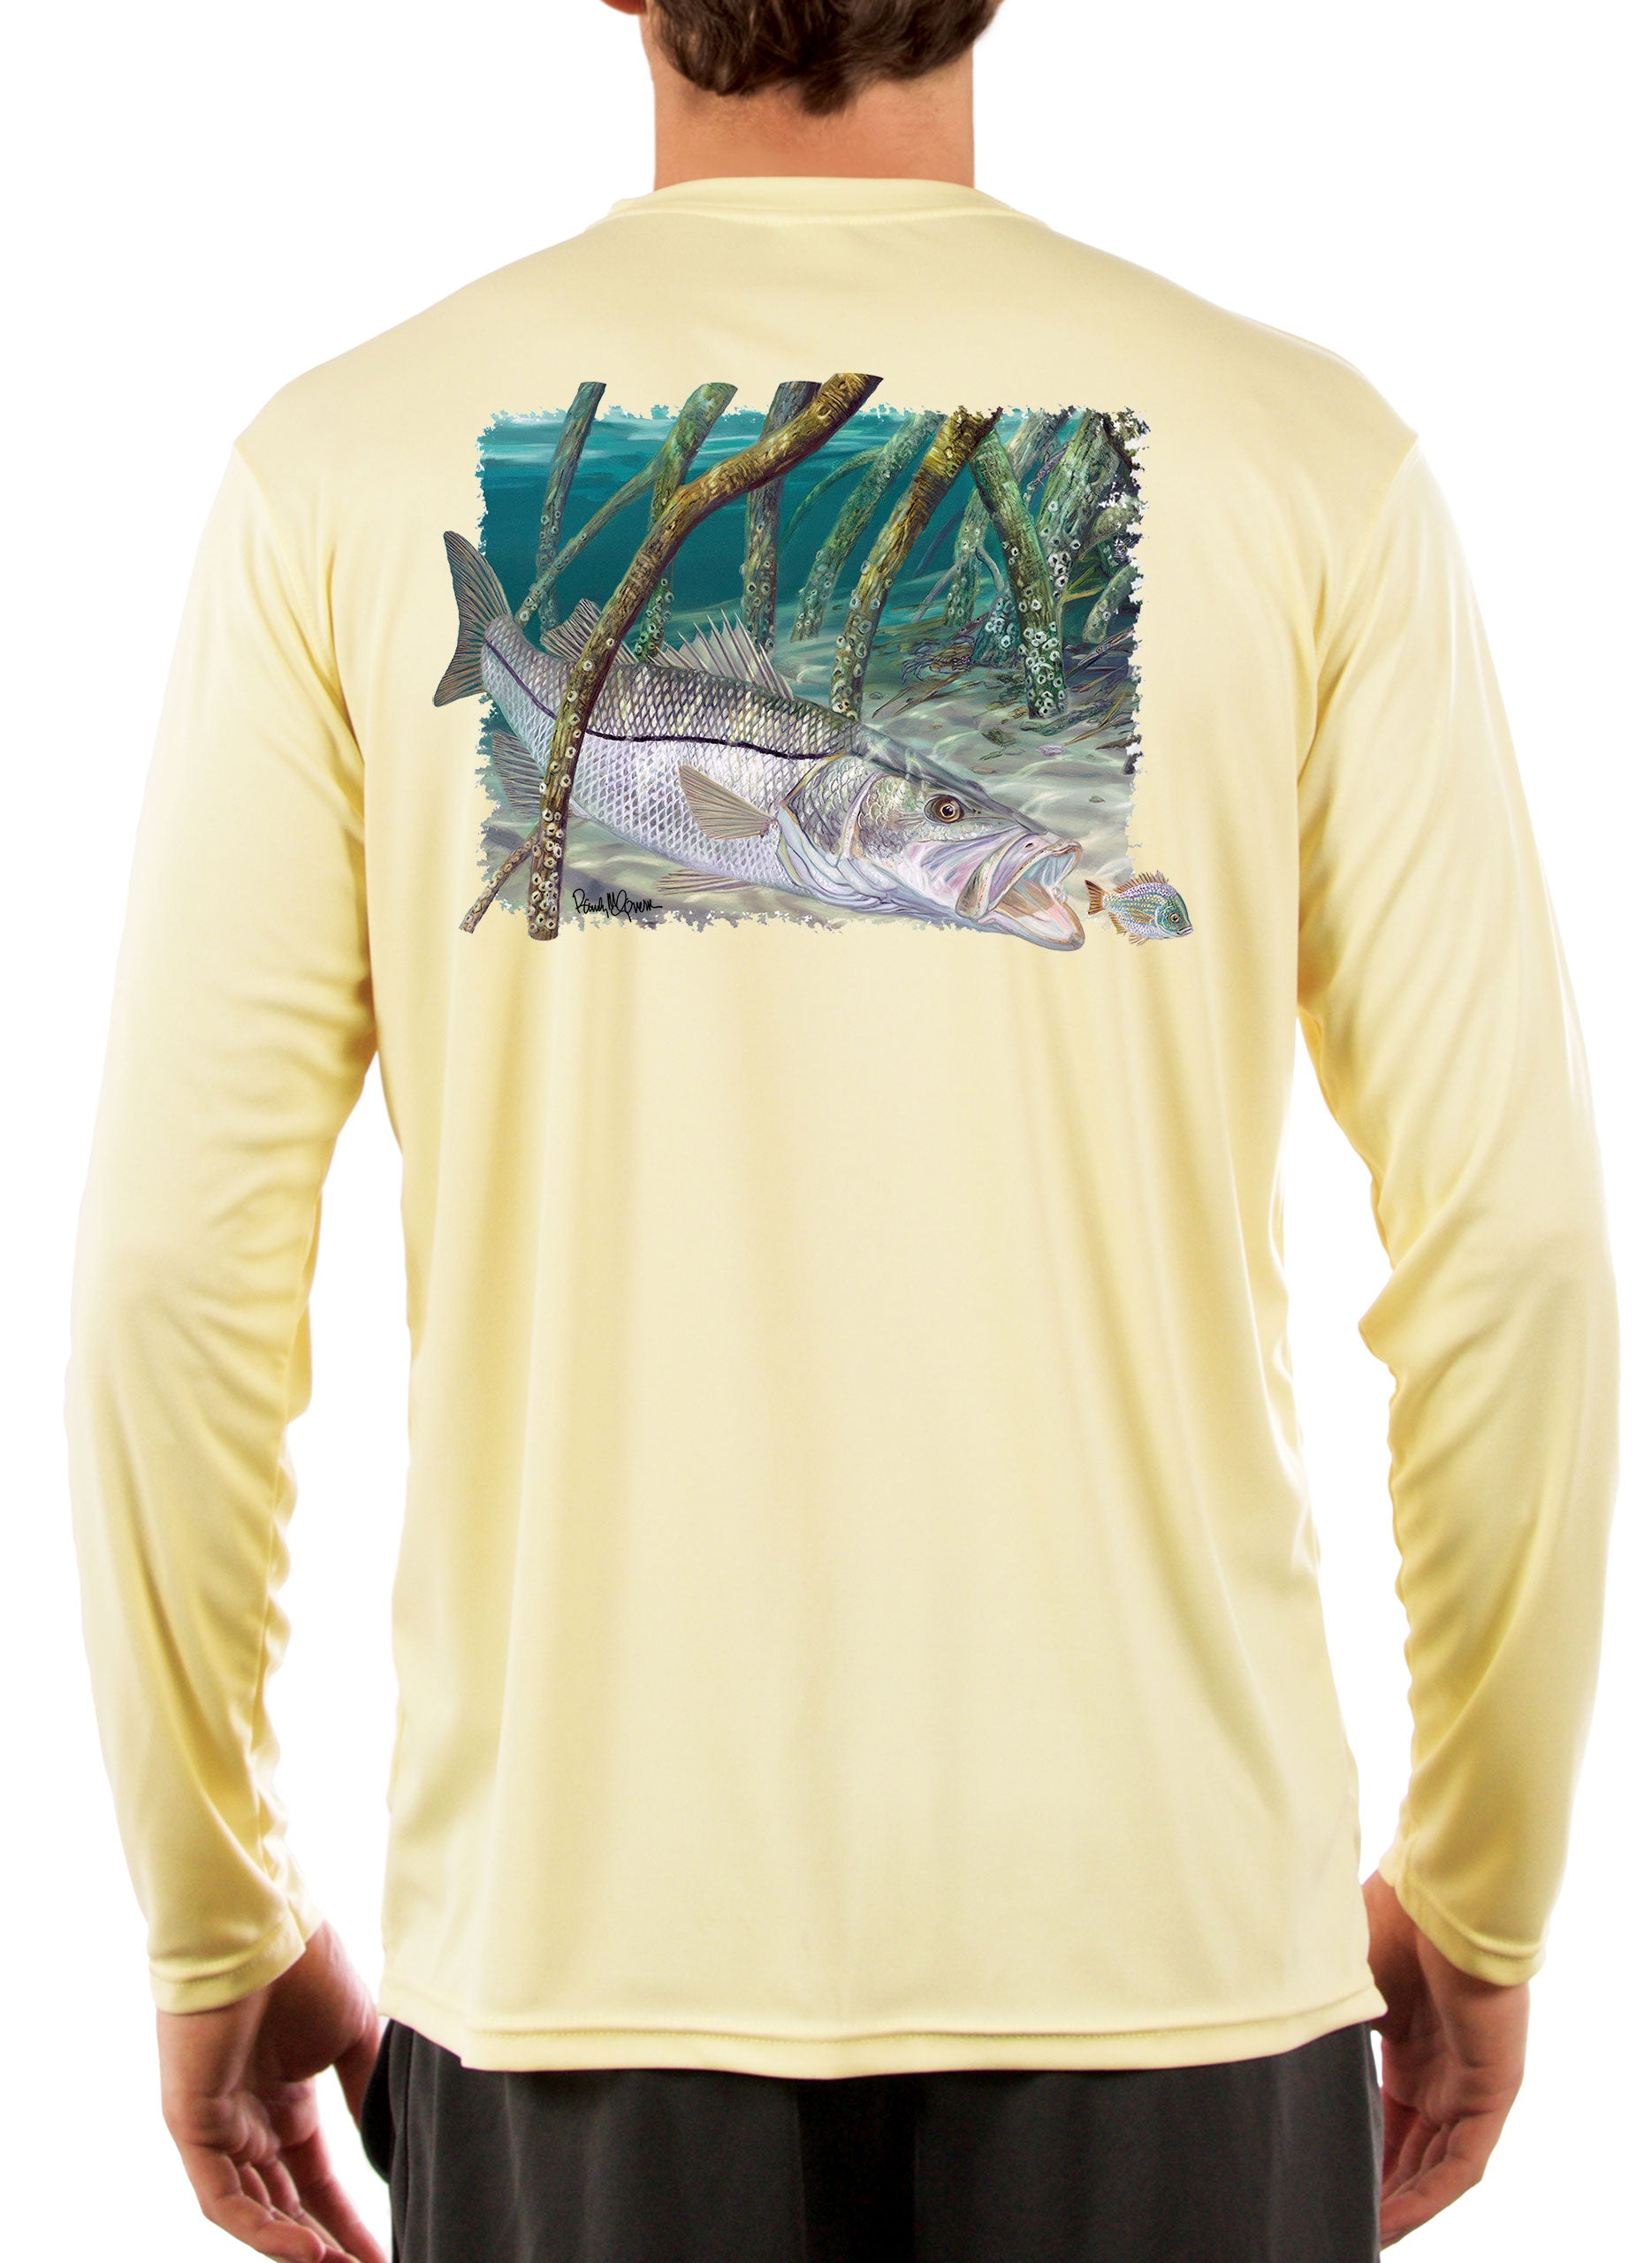 Fishing Shirts for Men Snook Fish in Mangroves by Award Winning Artist Randy McGovern Yellow / Medium